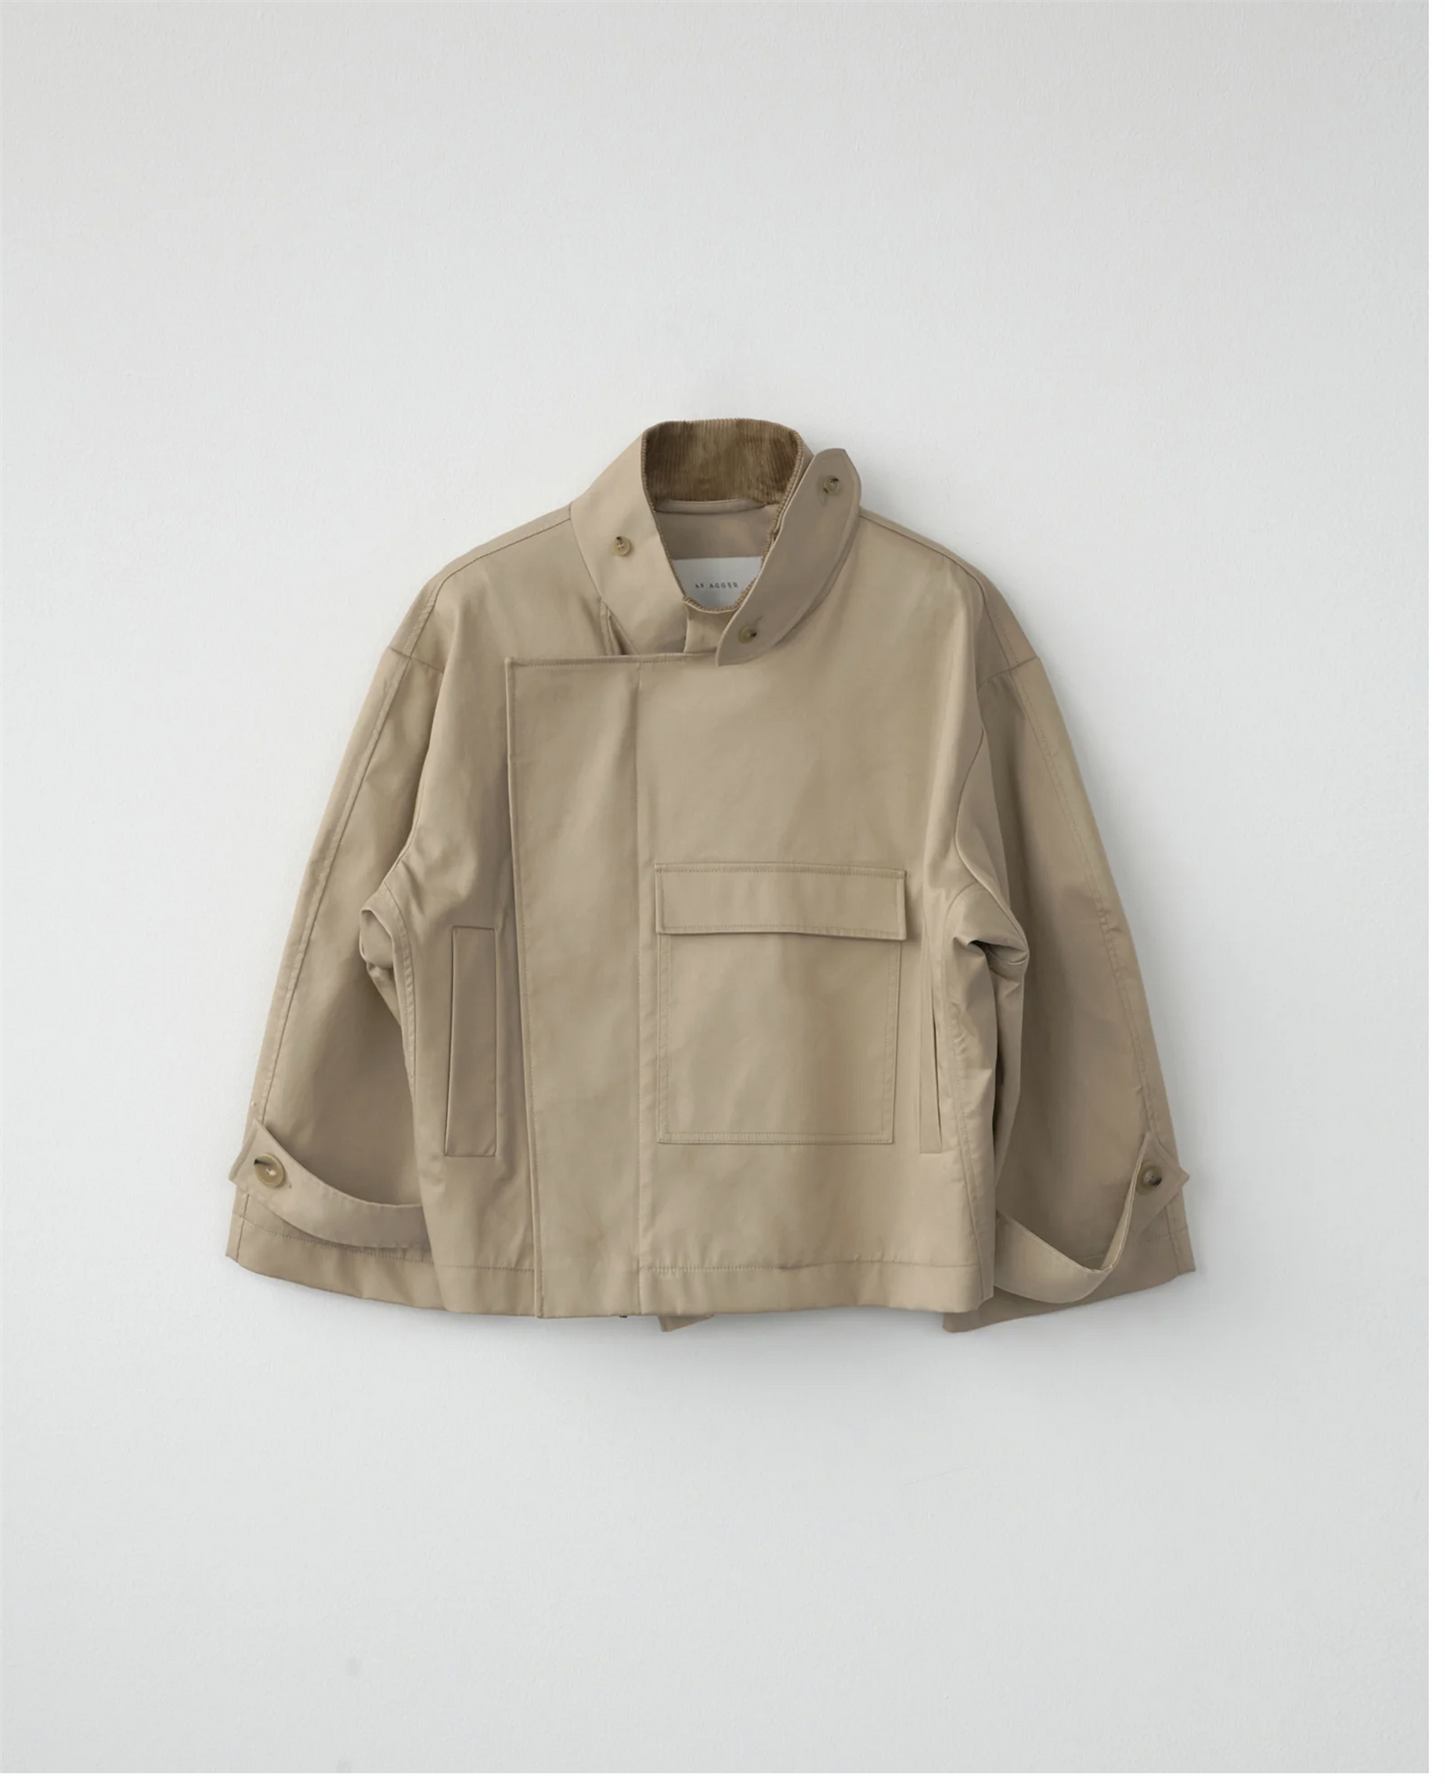 Water resistant jacket cool beige size 2